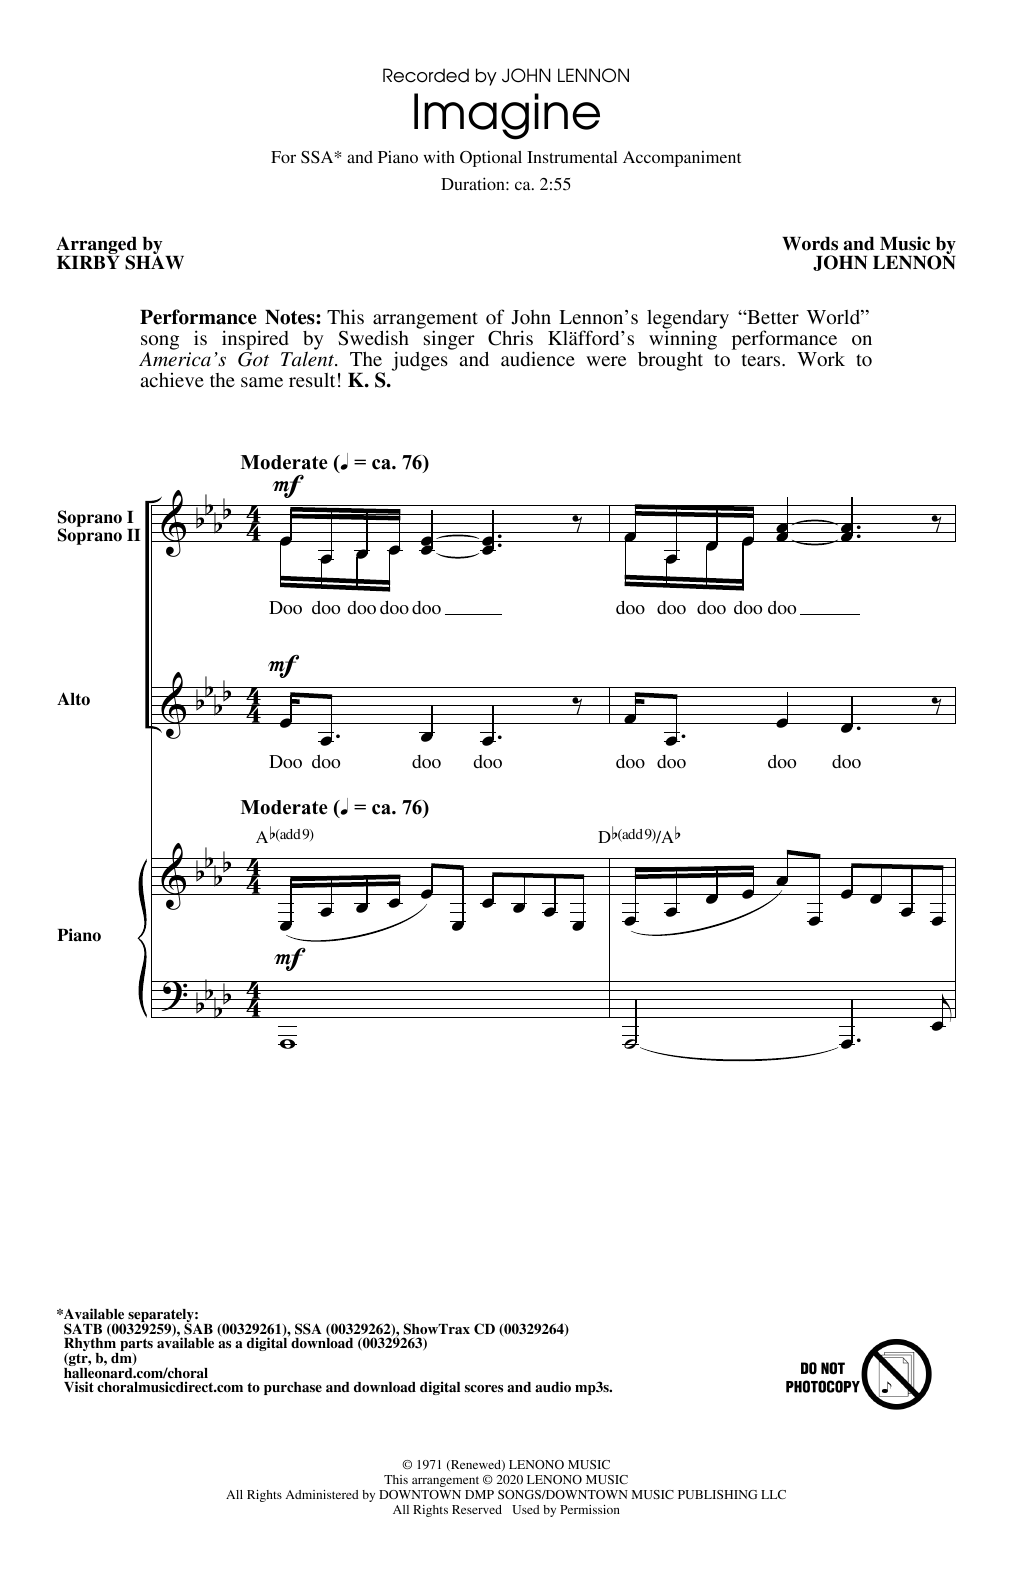 John Lennon Imagine (arr. Kirby Shaw) Sheet Music Notes & Chords for SSA Choir - Download or Print PDF